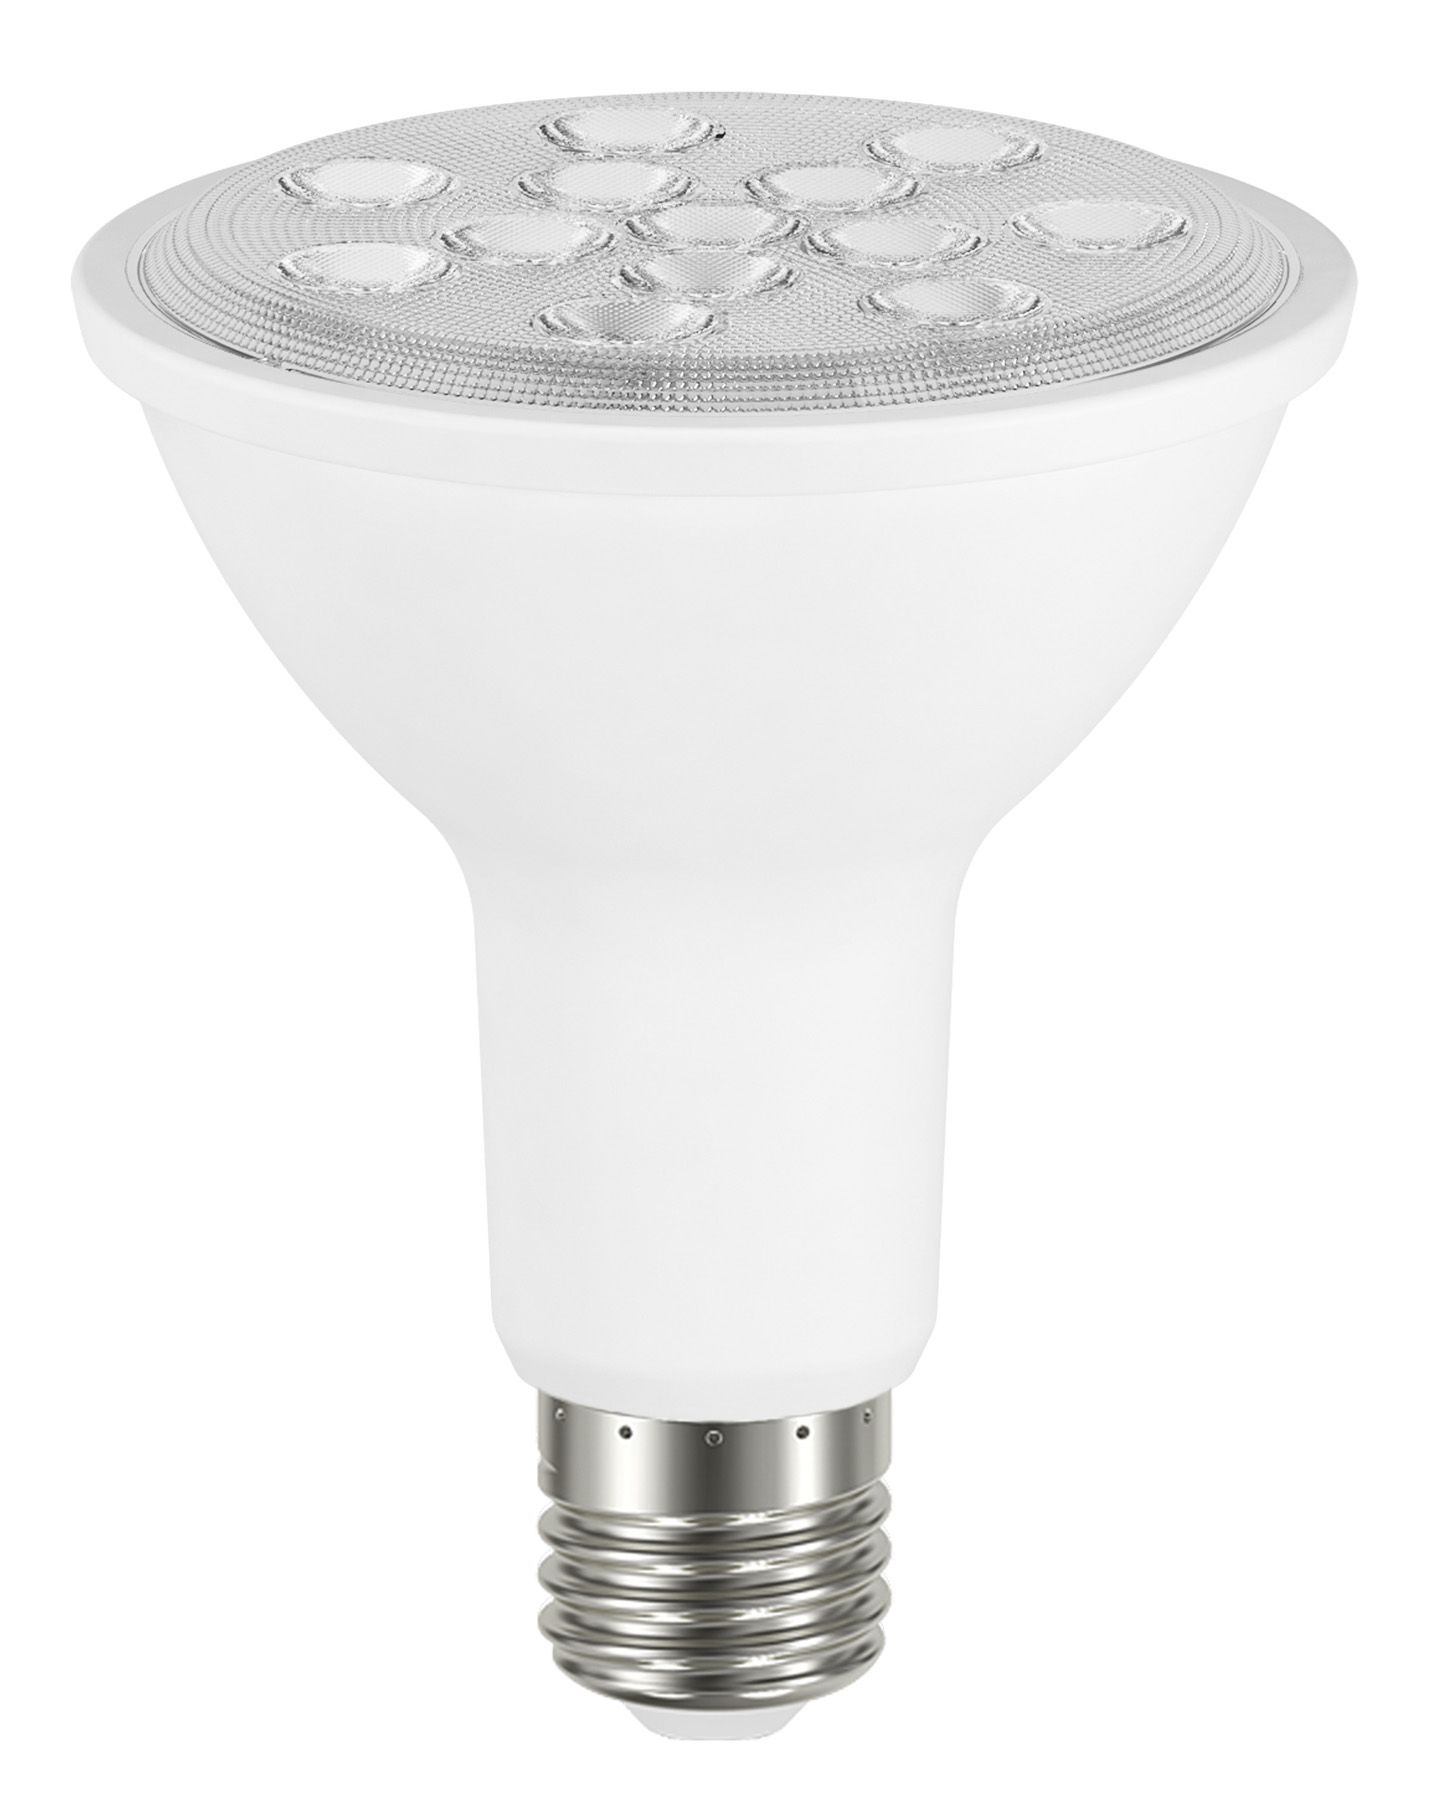 AIRAM E27 LED Reflector Lamp 10 W(60W), 4000K, Cool White, Reflector shape